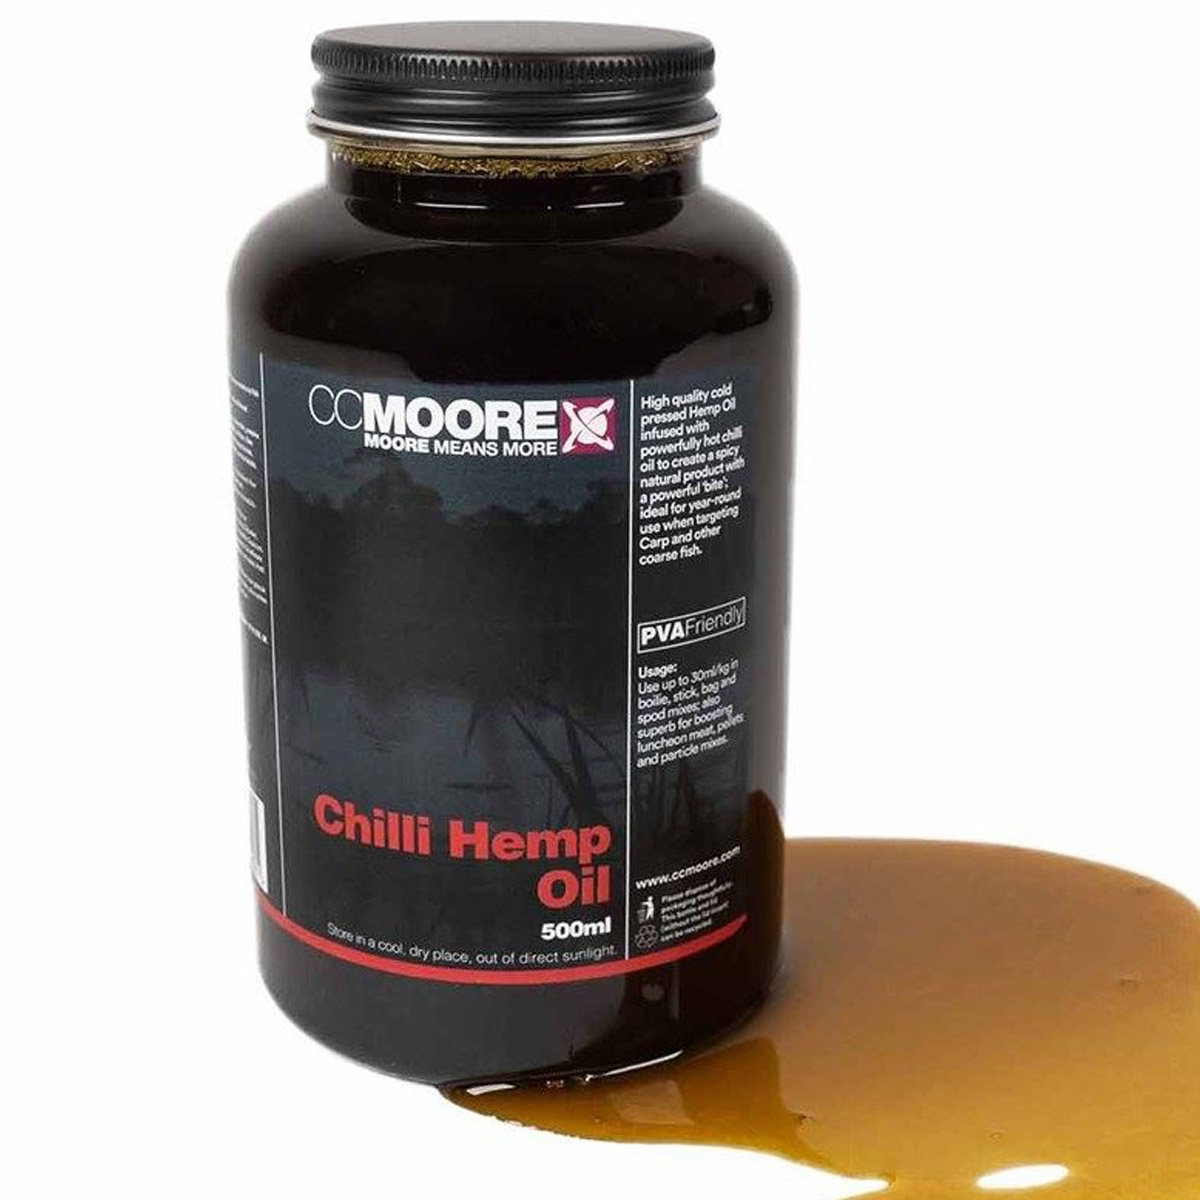 Cc Moore Chilli Hemp Oil 500ml